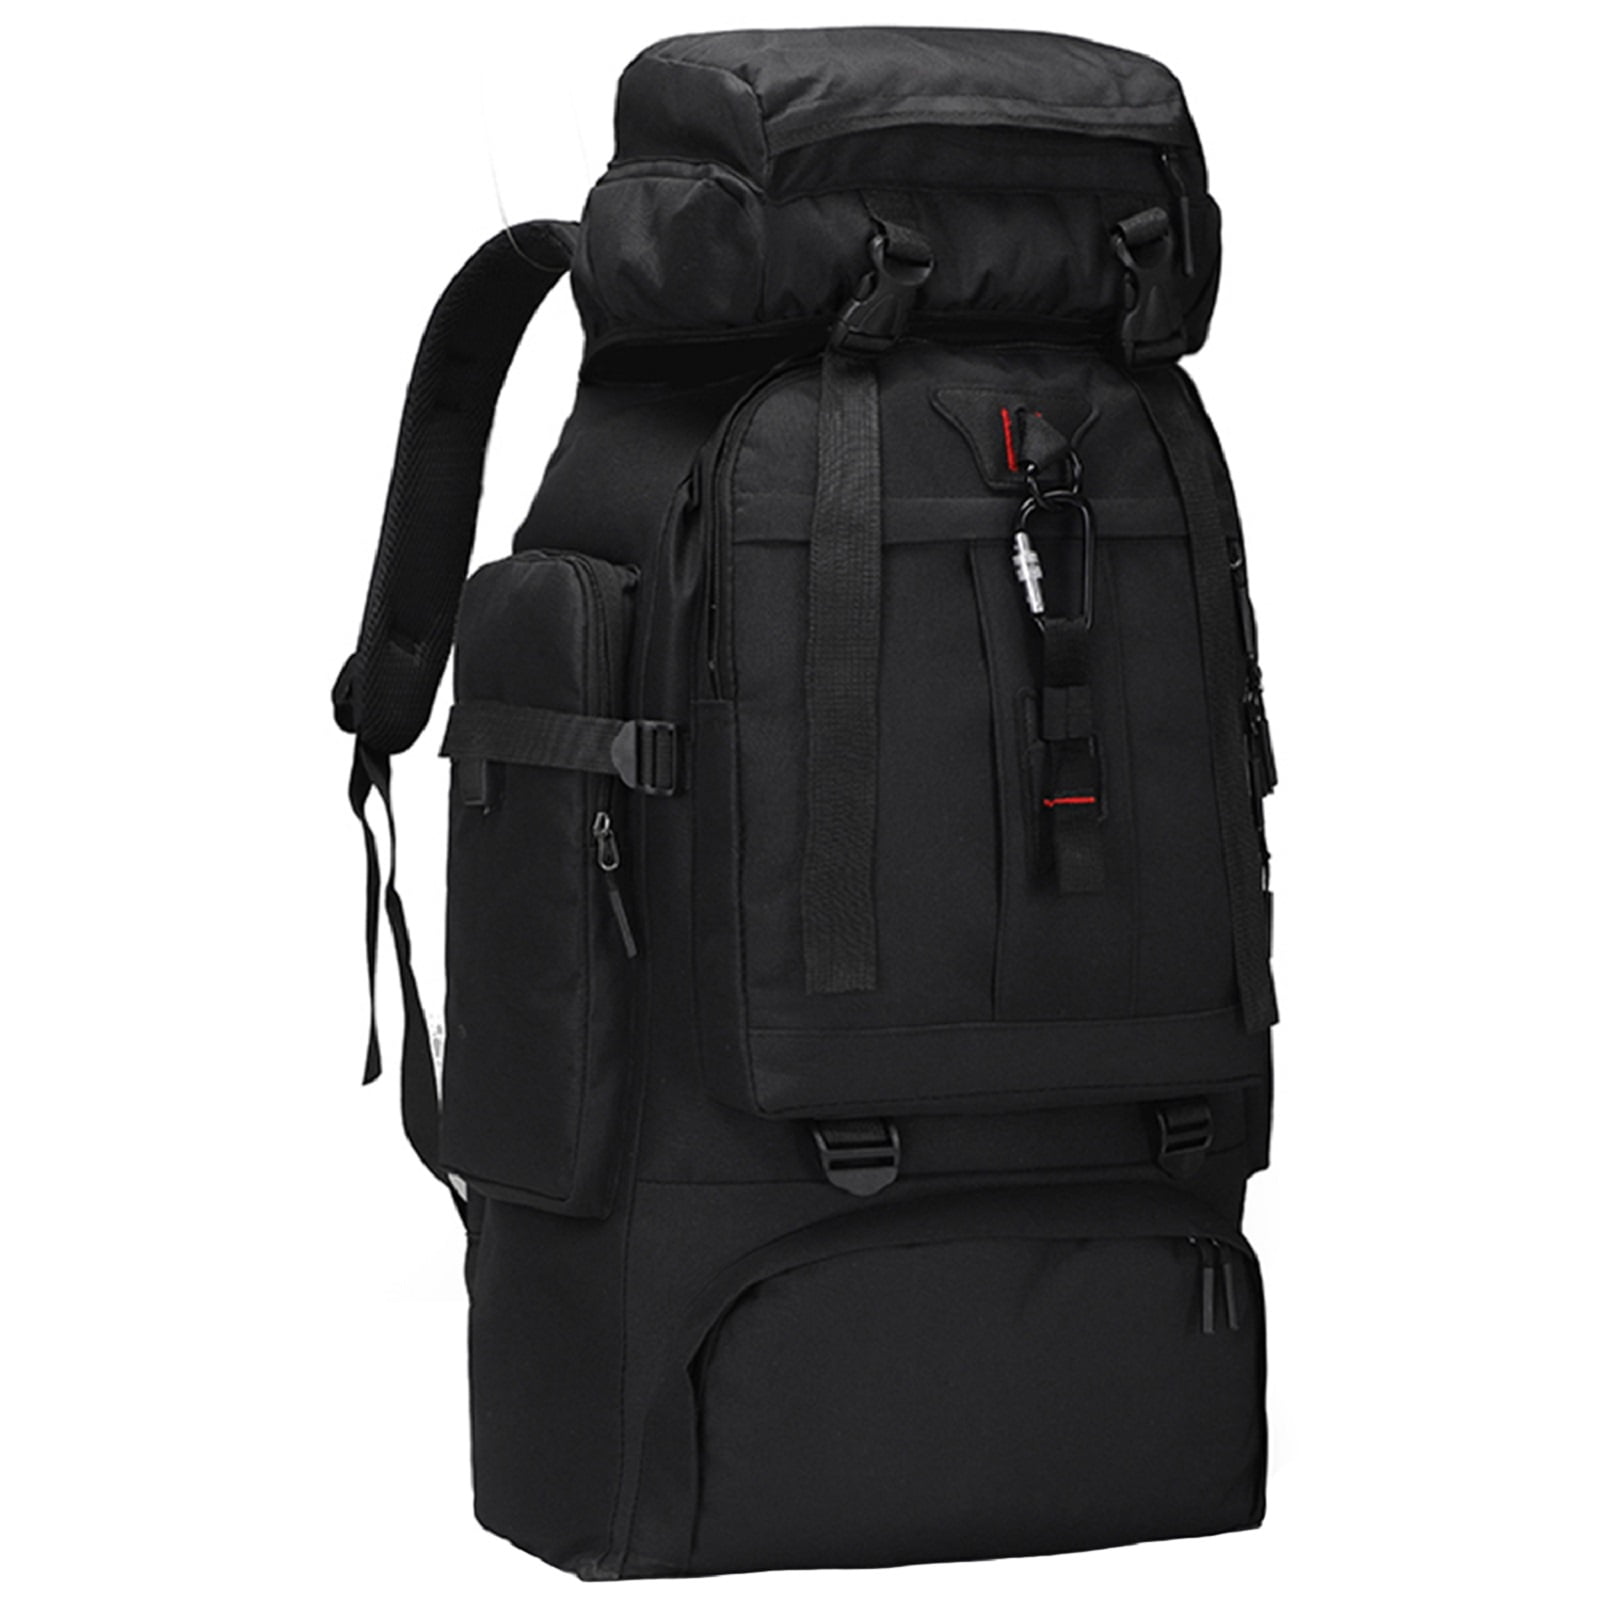 WolfWise Lightweight Waterproof 50L Hiking Backpack Travel Rucksacks UK BUSINESS 